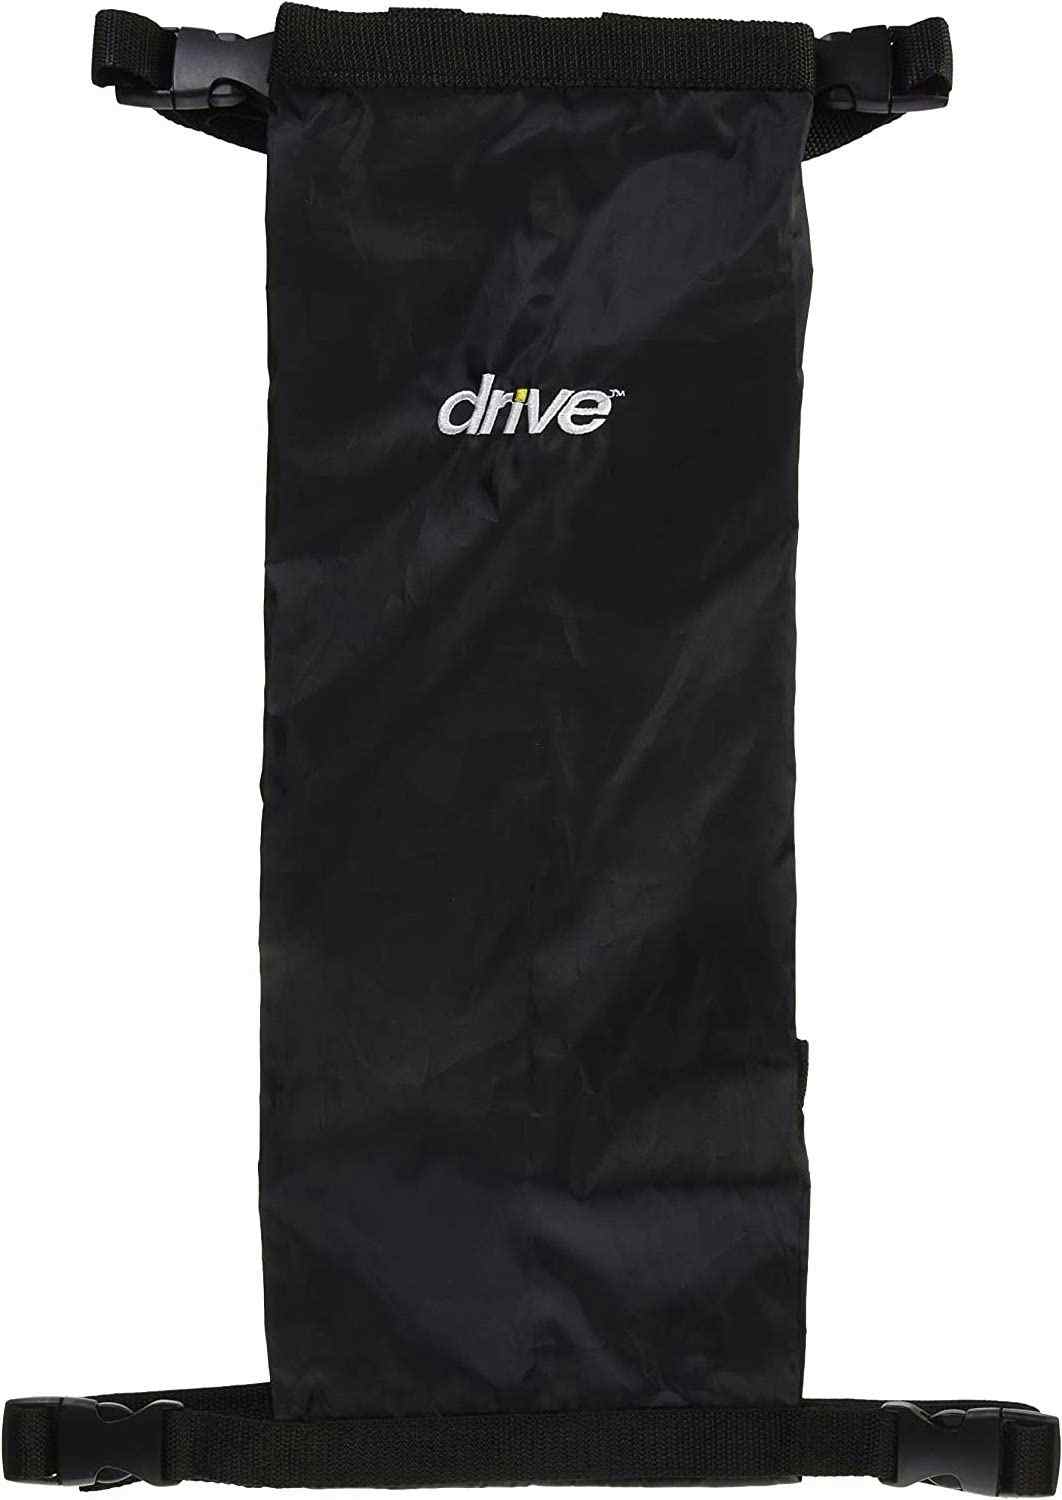 drive Oxygen Cylinder Carry Bag